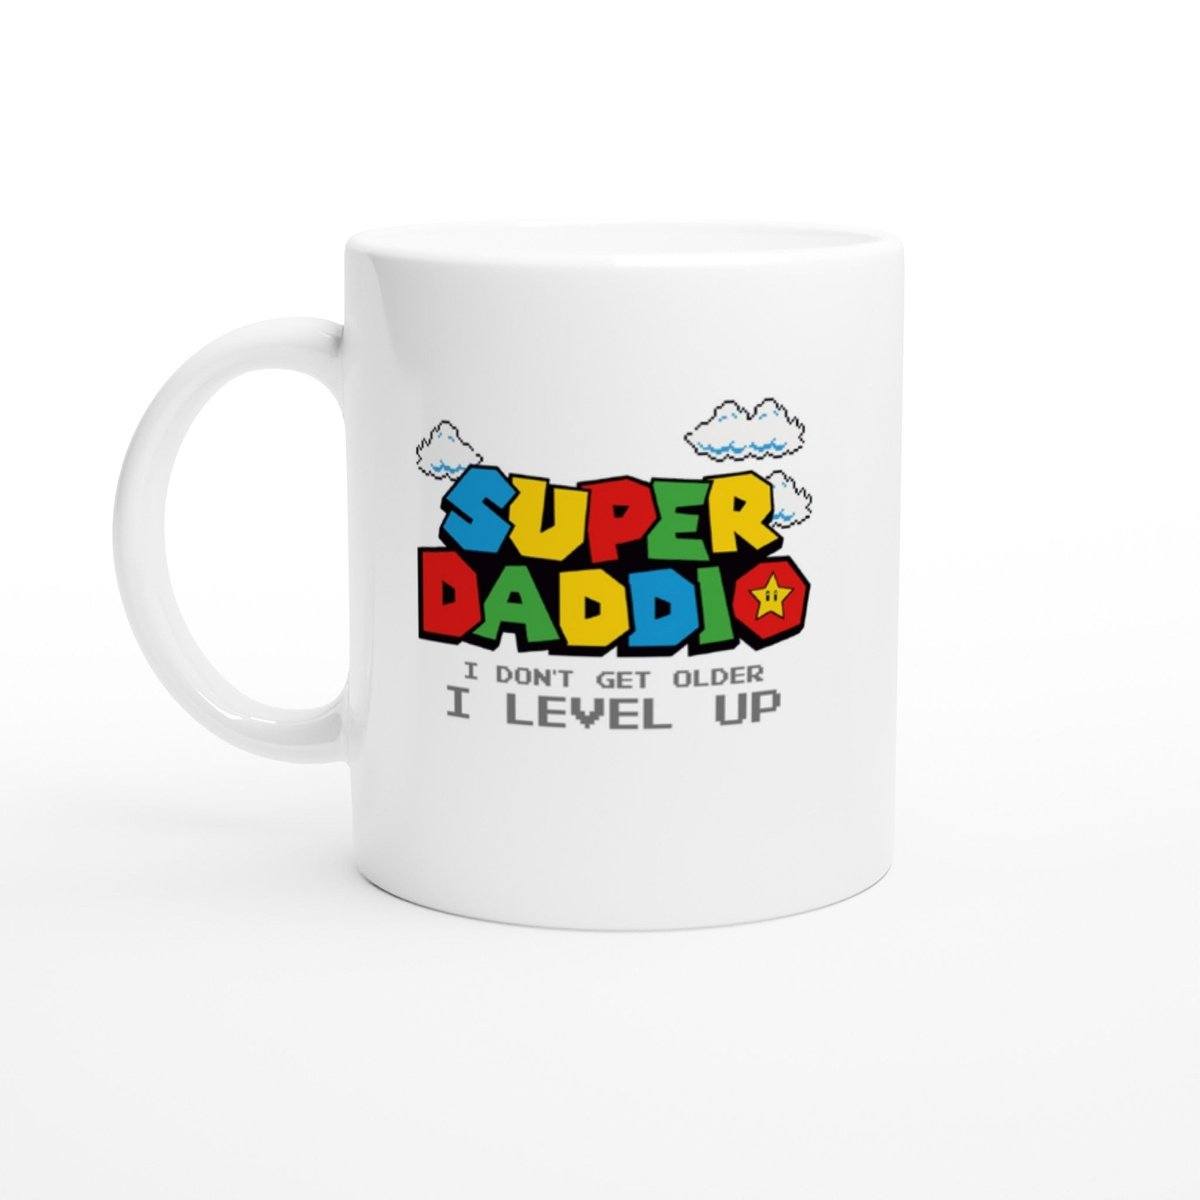 Super Daddio Mug Australia Online Color